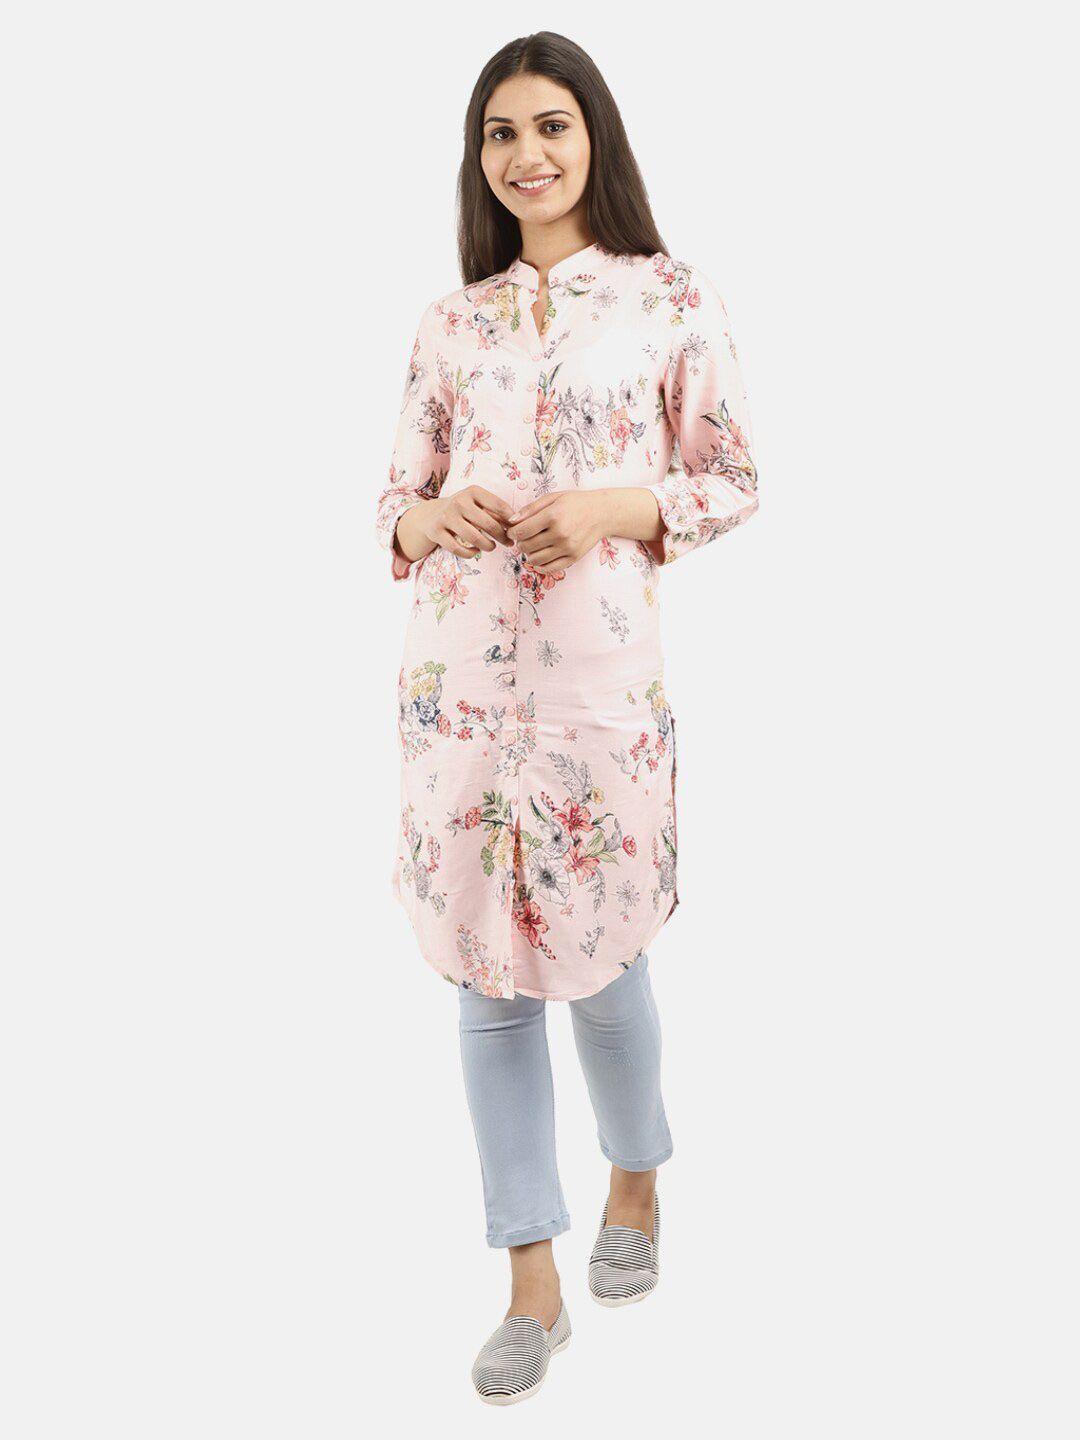 v-mart women western peach-coloured floral print shirt style longline top